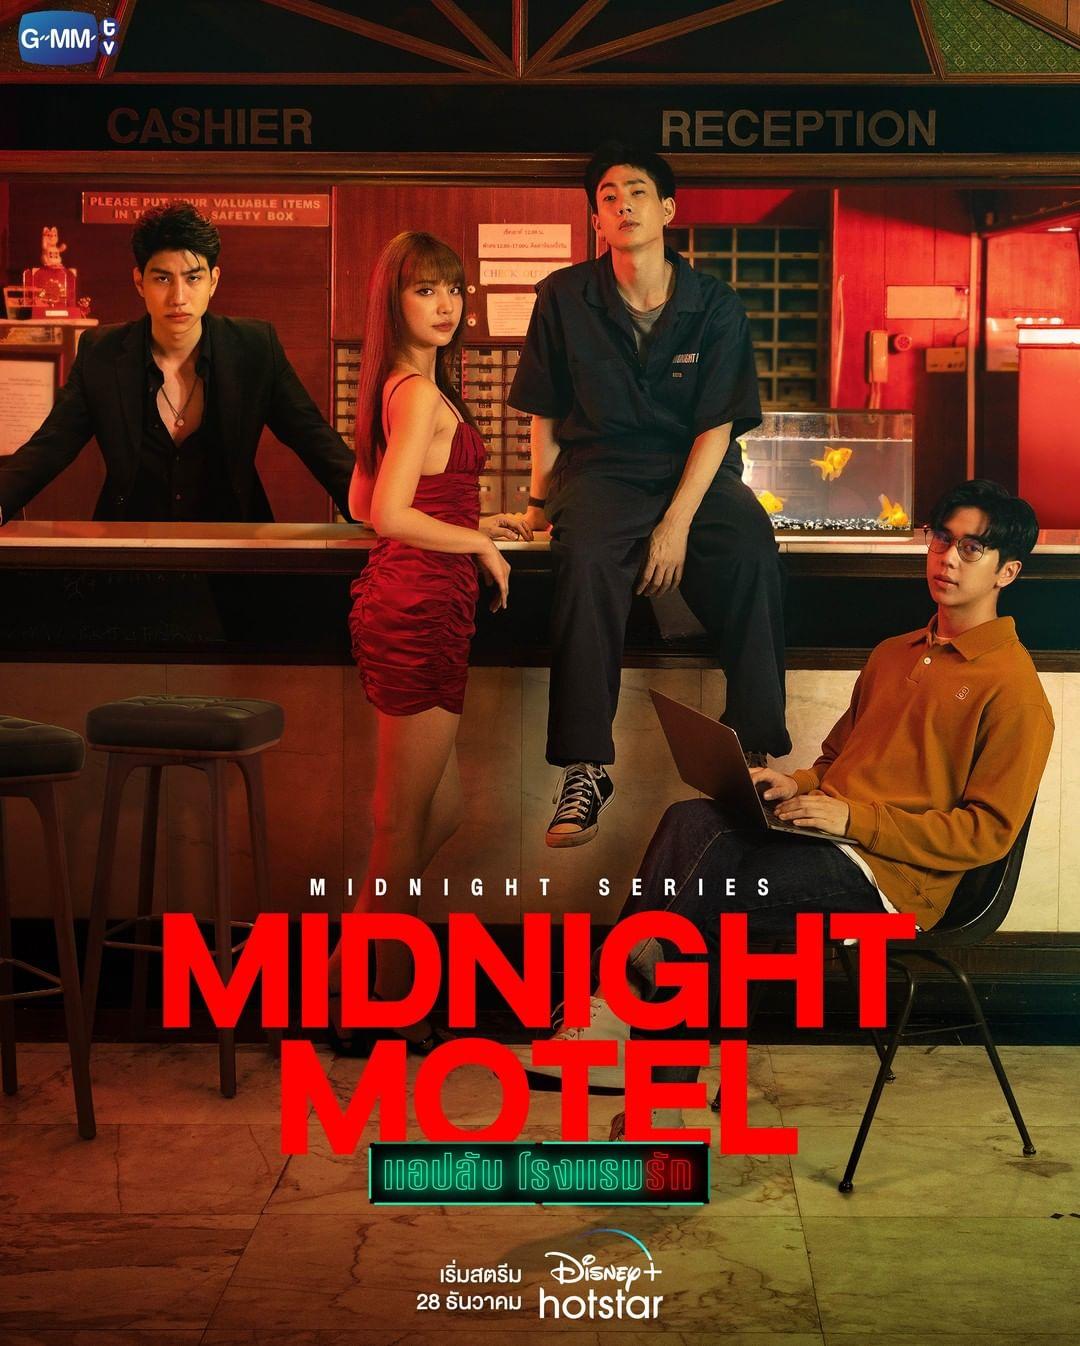 Poster phim Midnight Motel (Ảnh: GMMTV)